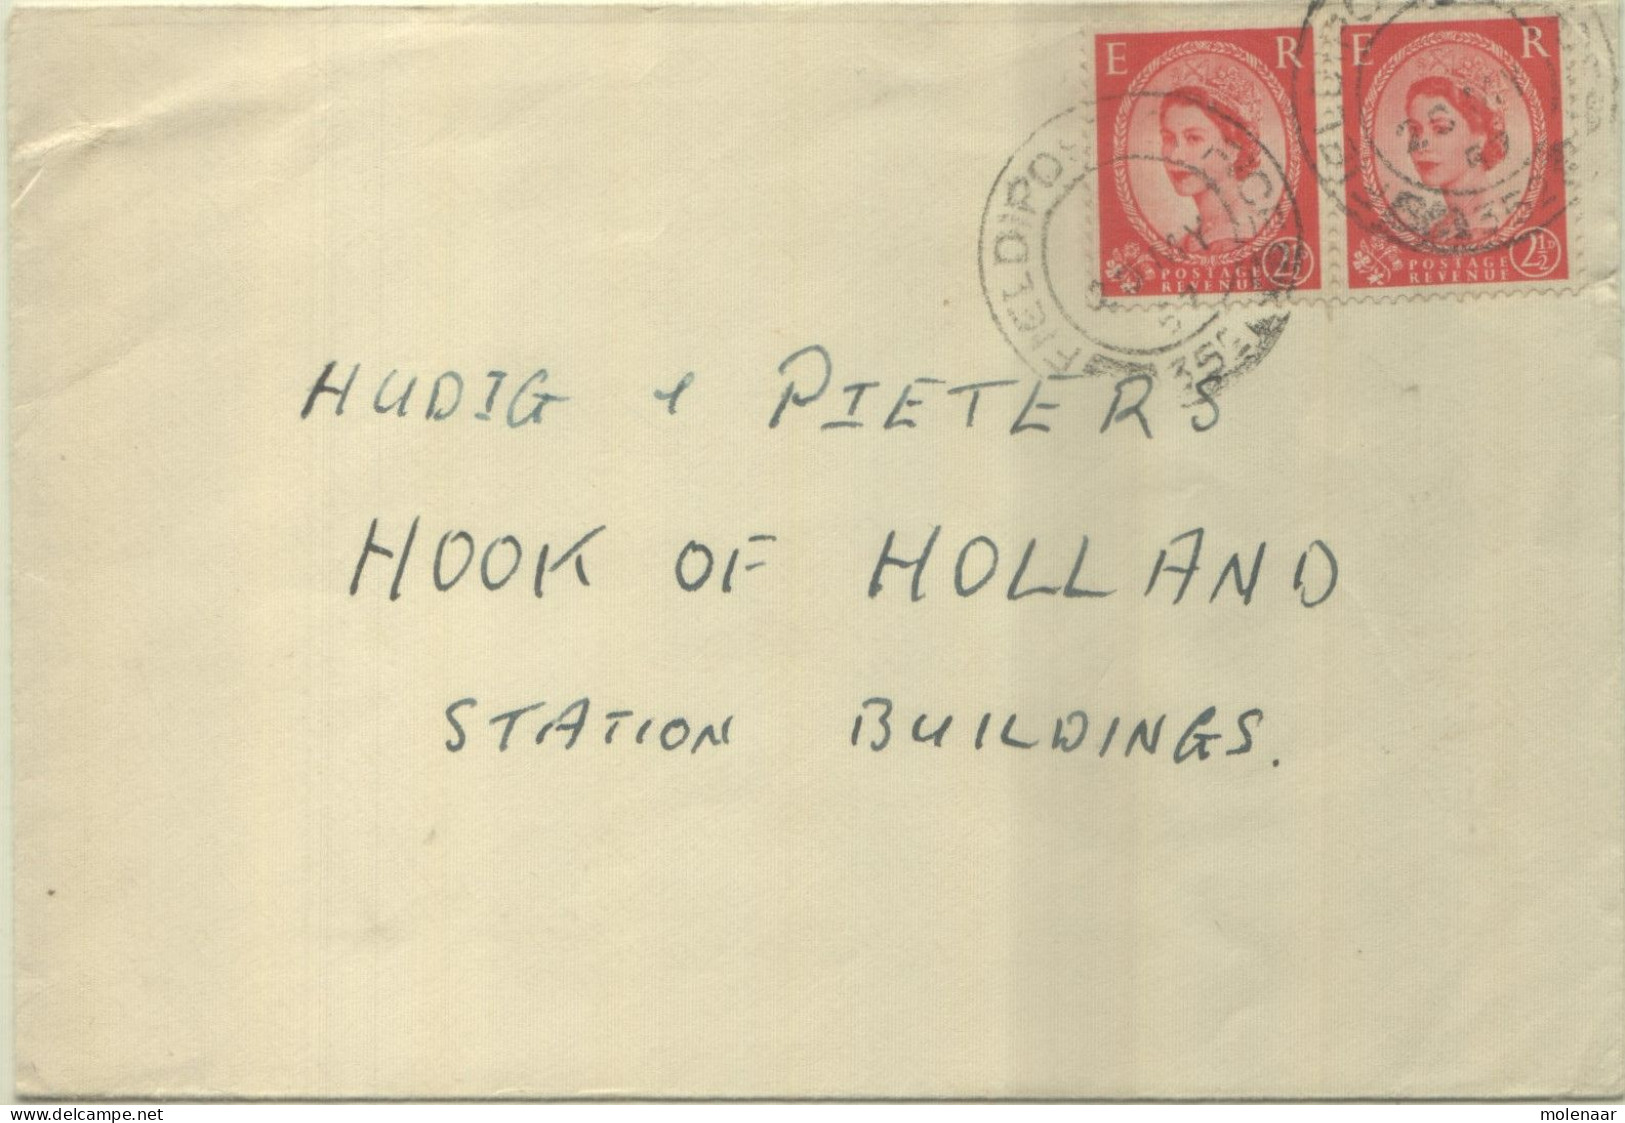 Postzegels > Europa > Groot-Brittannië > 1952-2022 Elizabeth II > 1971-1980  > Brief Met 2 Postzegels (16818) - Storia Postale